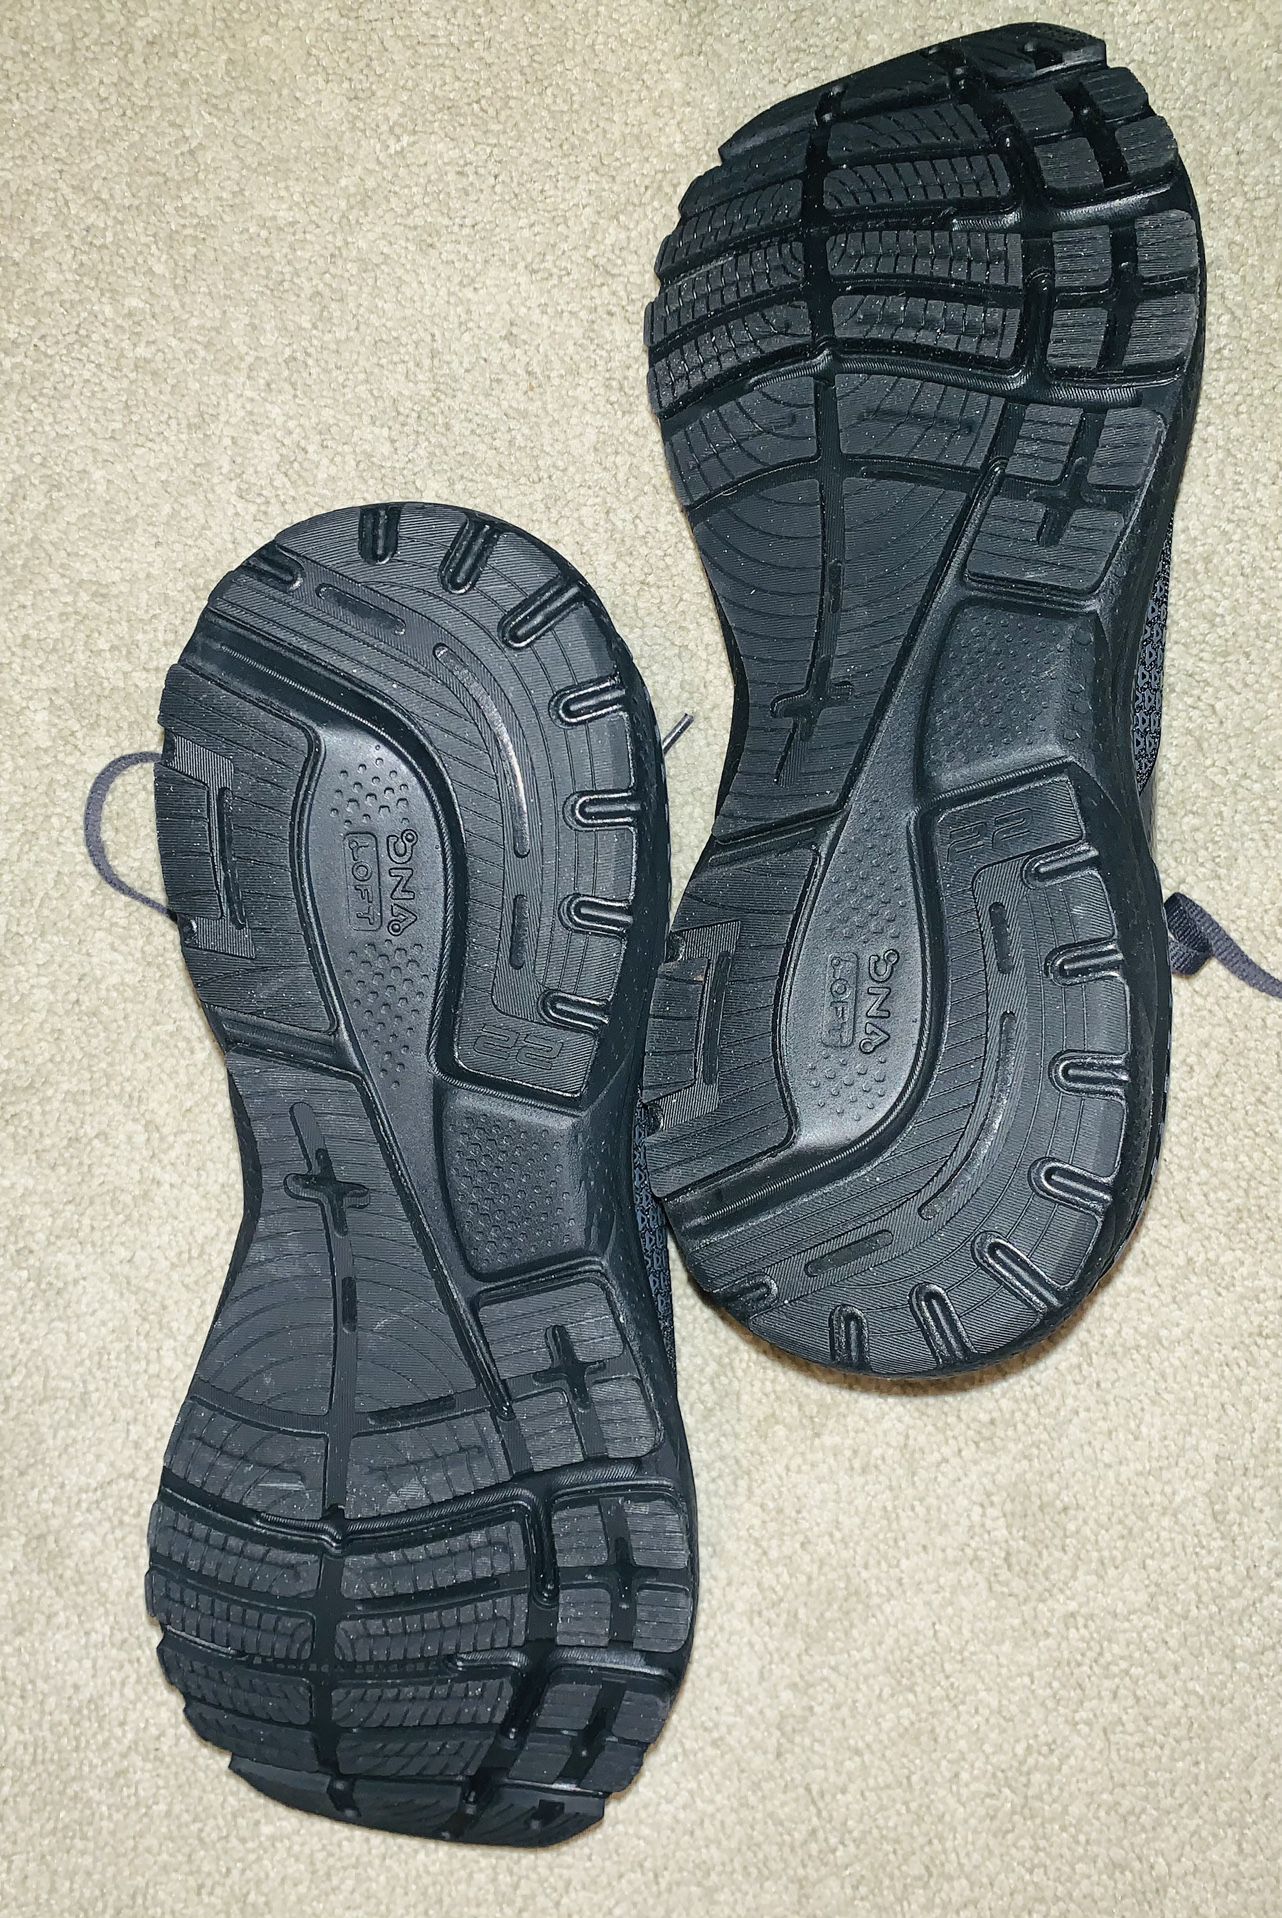 Brooks Adrenaline GTS22 Running Shoe / Sneaker - Size 11